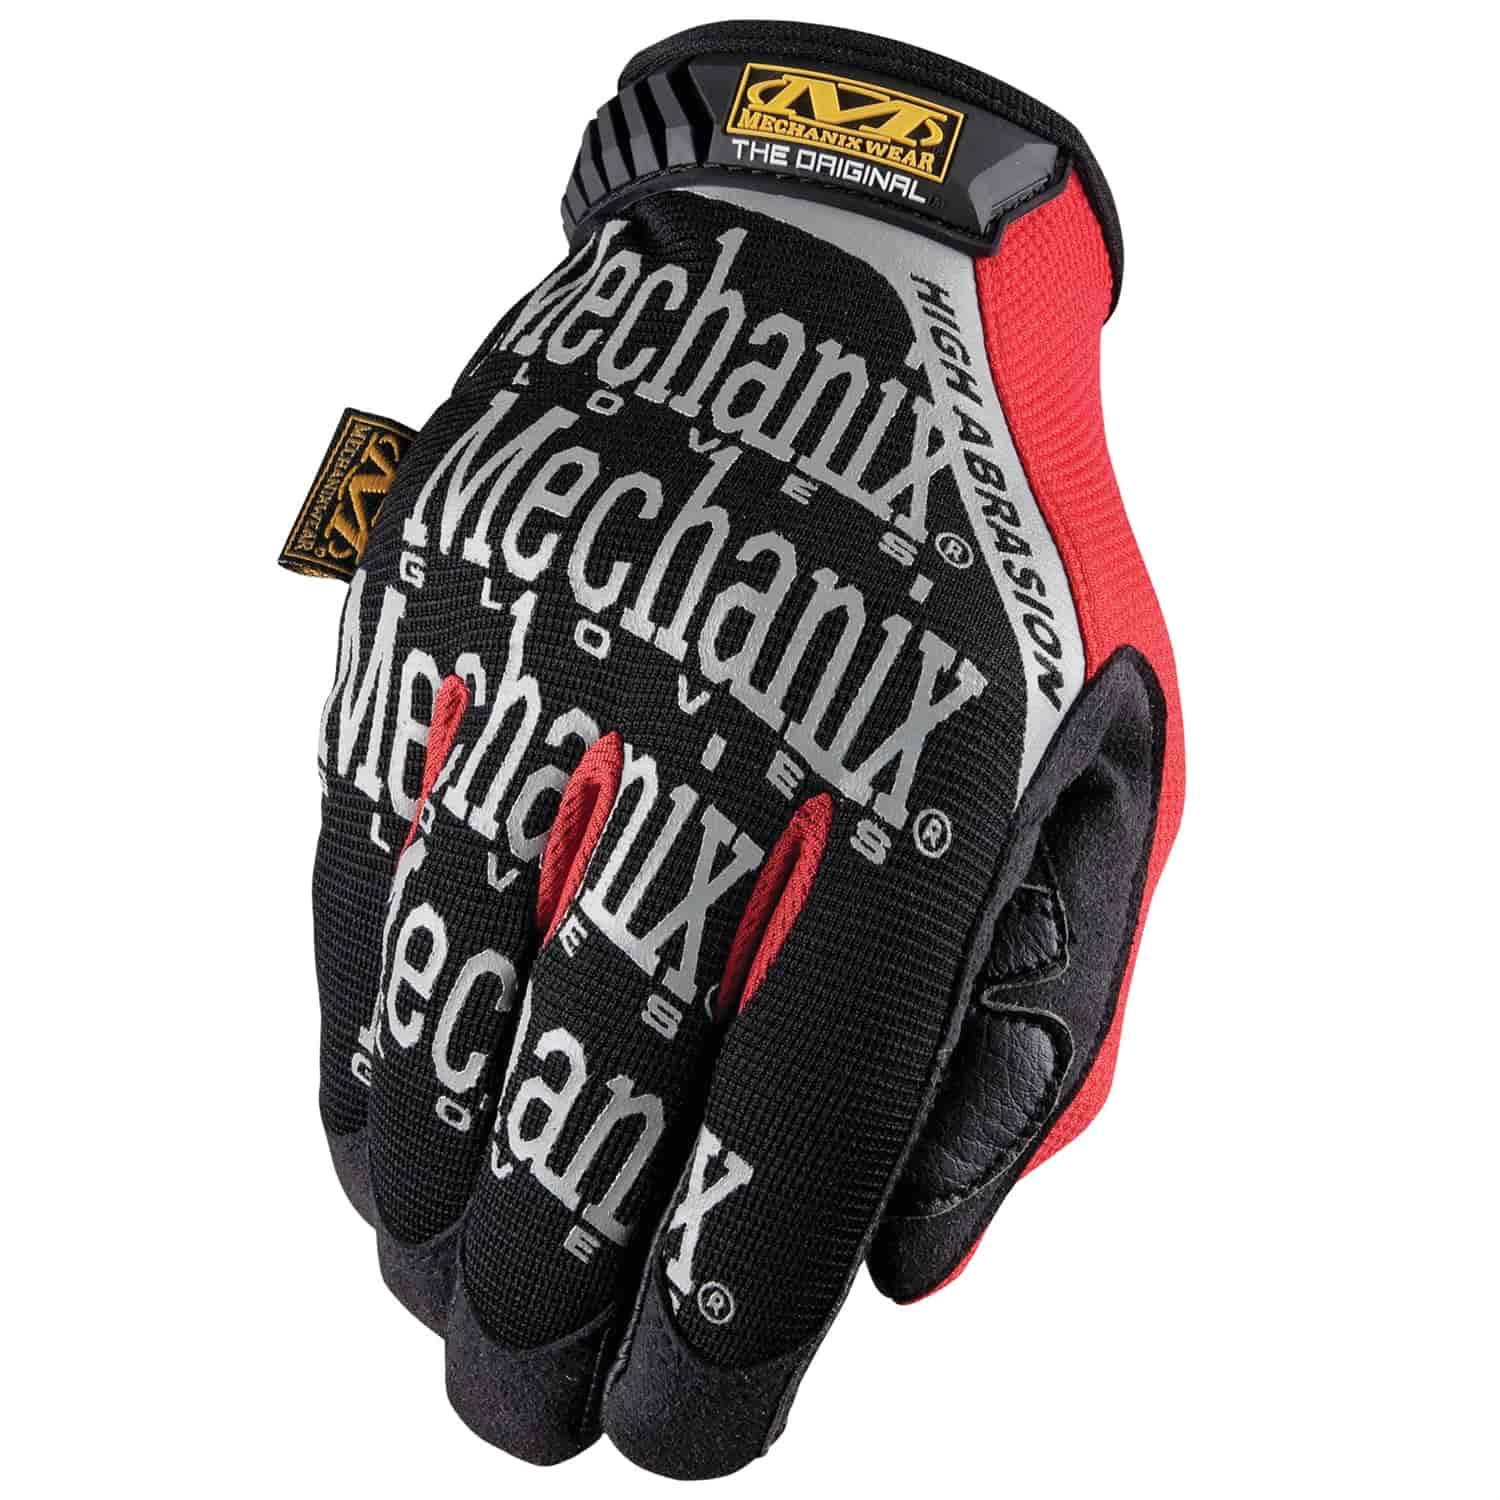 Mechanix Wear The Original High Abrasion Gloves